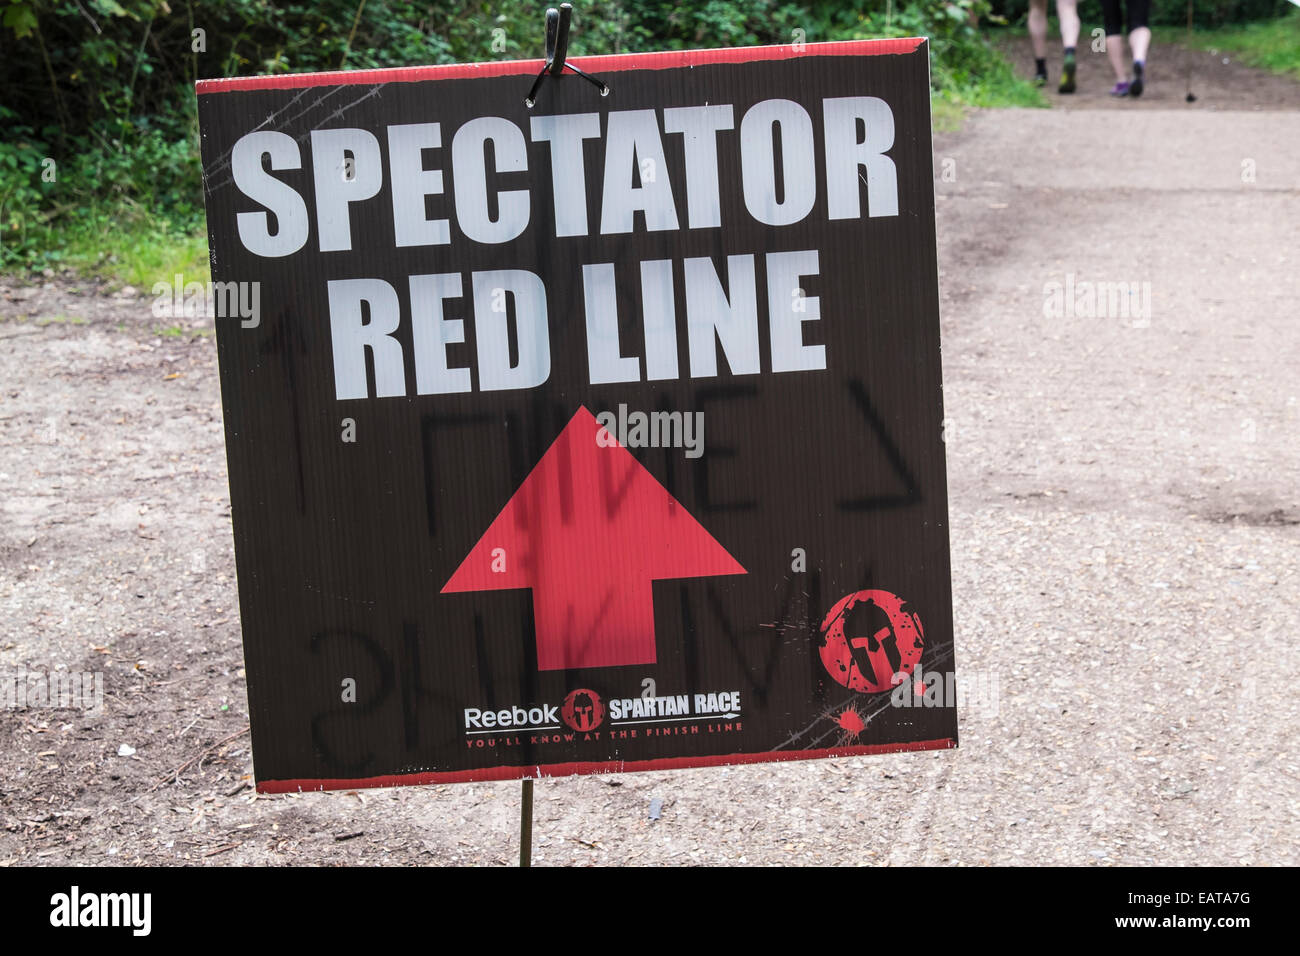 Spectator direction sign Spartan race Milton country park Stock Photo